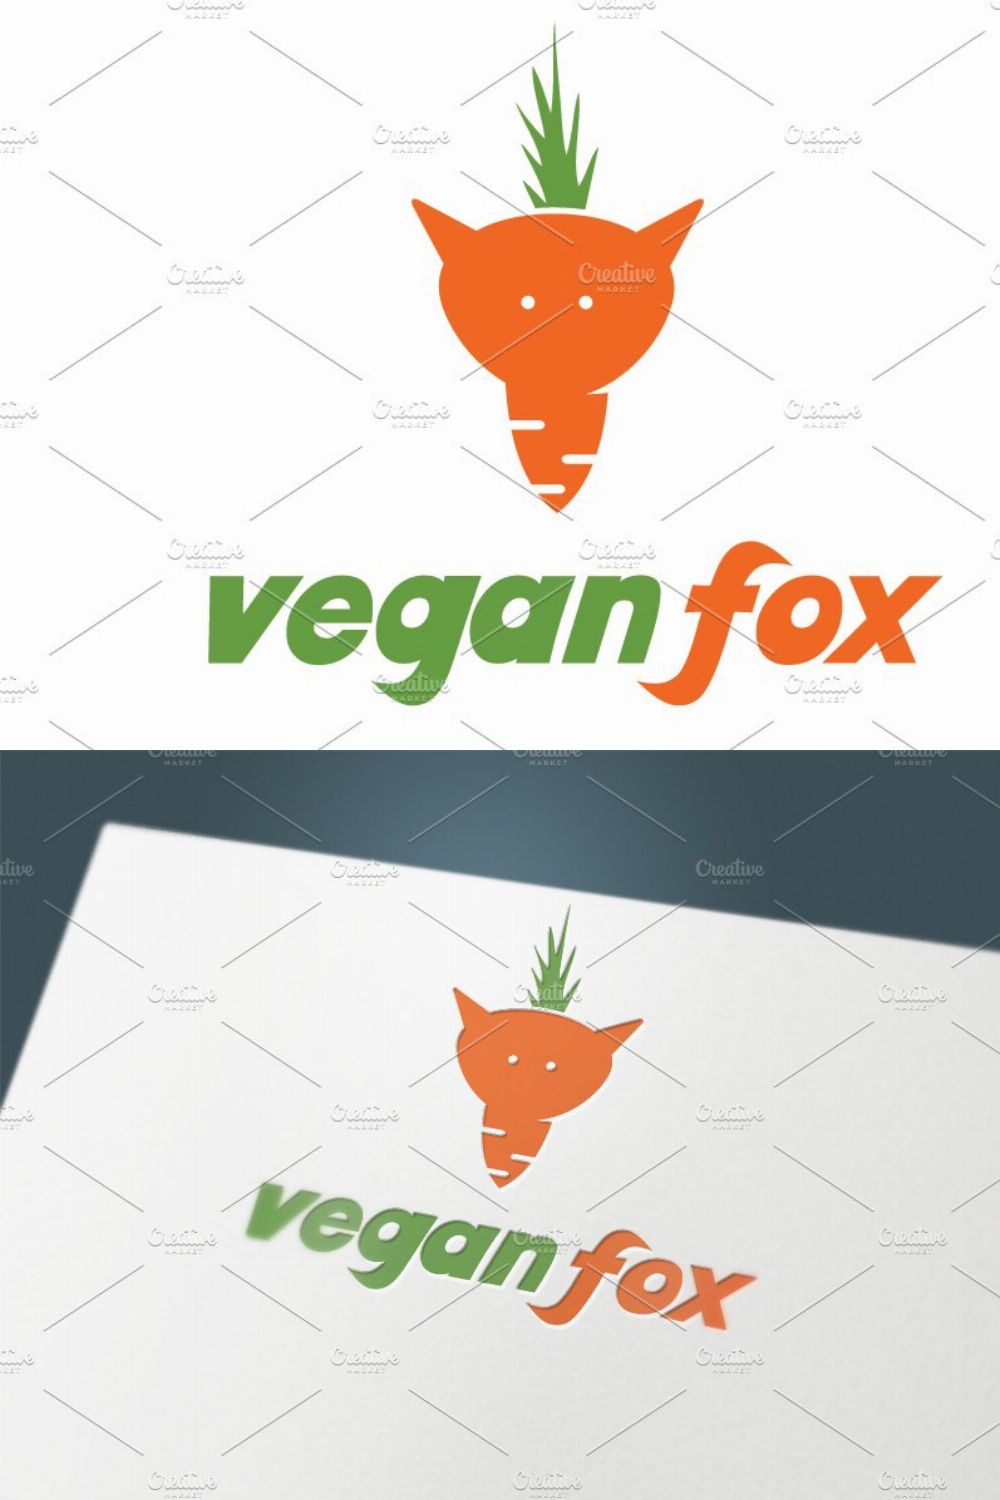 logo "concept fox-carrot" pinterest preview image.